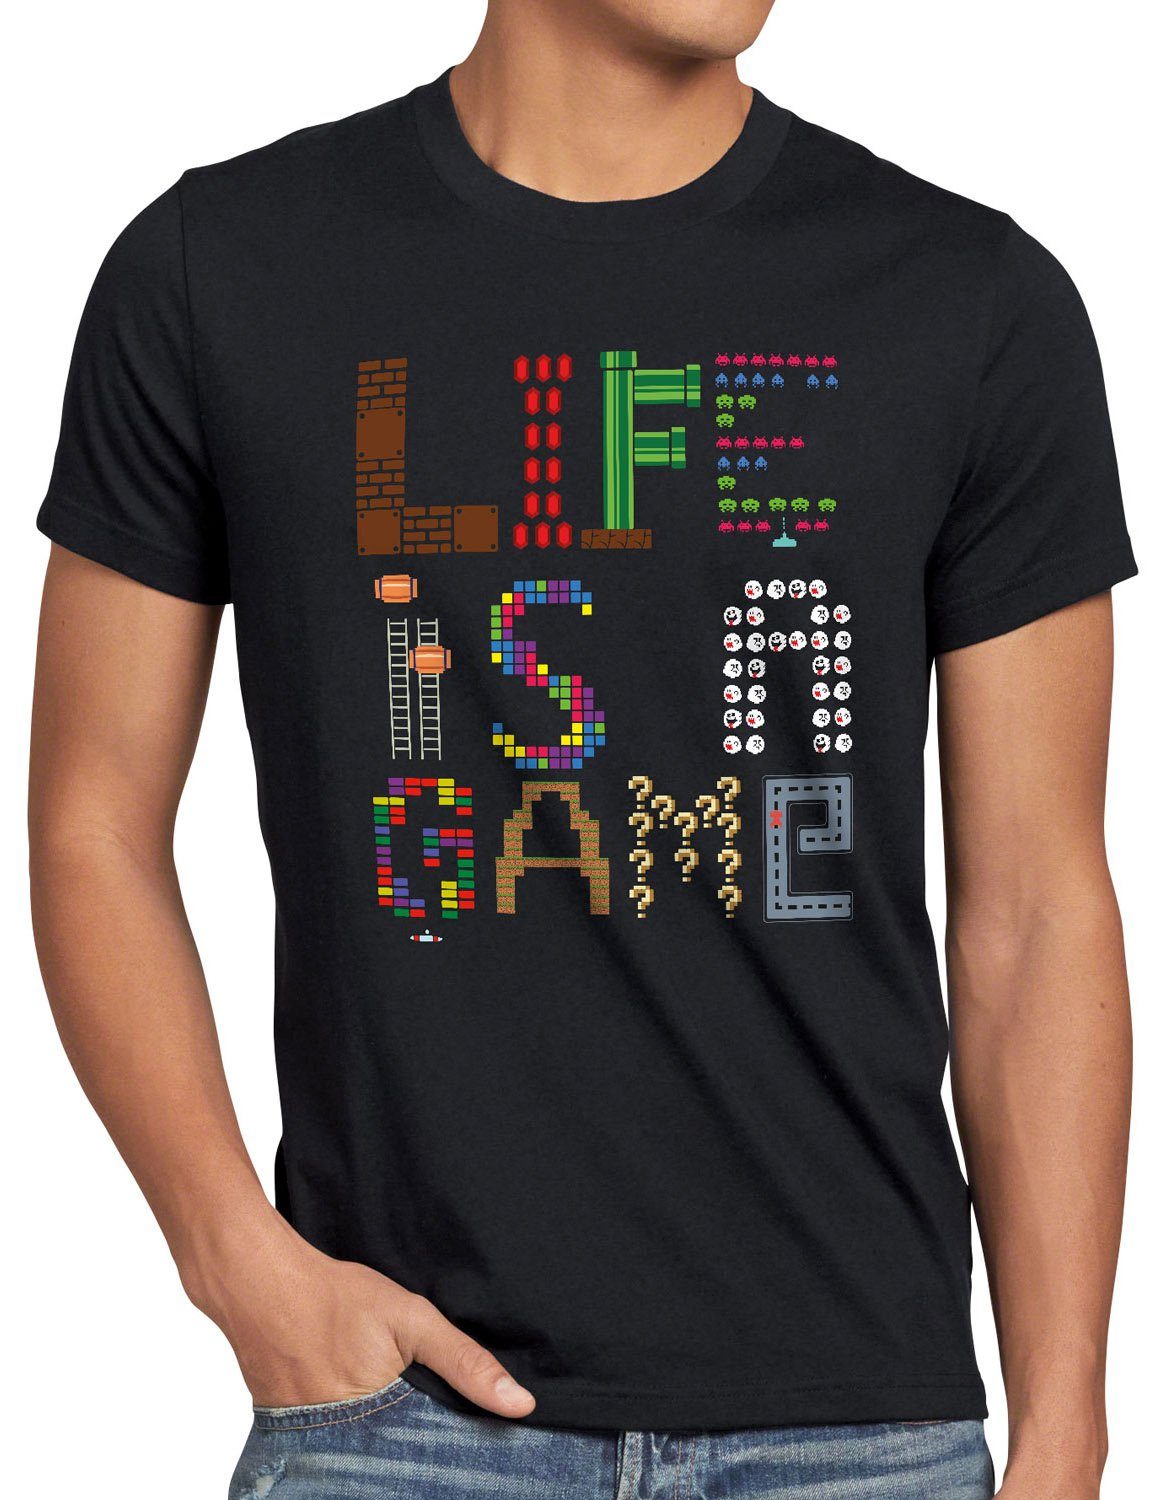 Pixel Gamer is zelda style3 Life Jungen schwarz Boy Herren T-Shirt Spiel Game Print-Shirt mario a Konsole